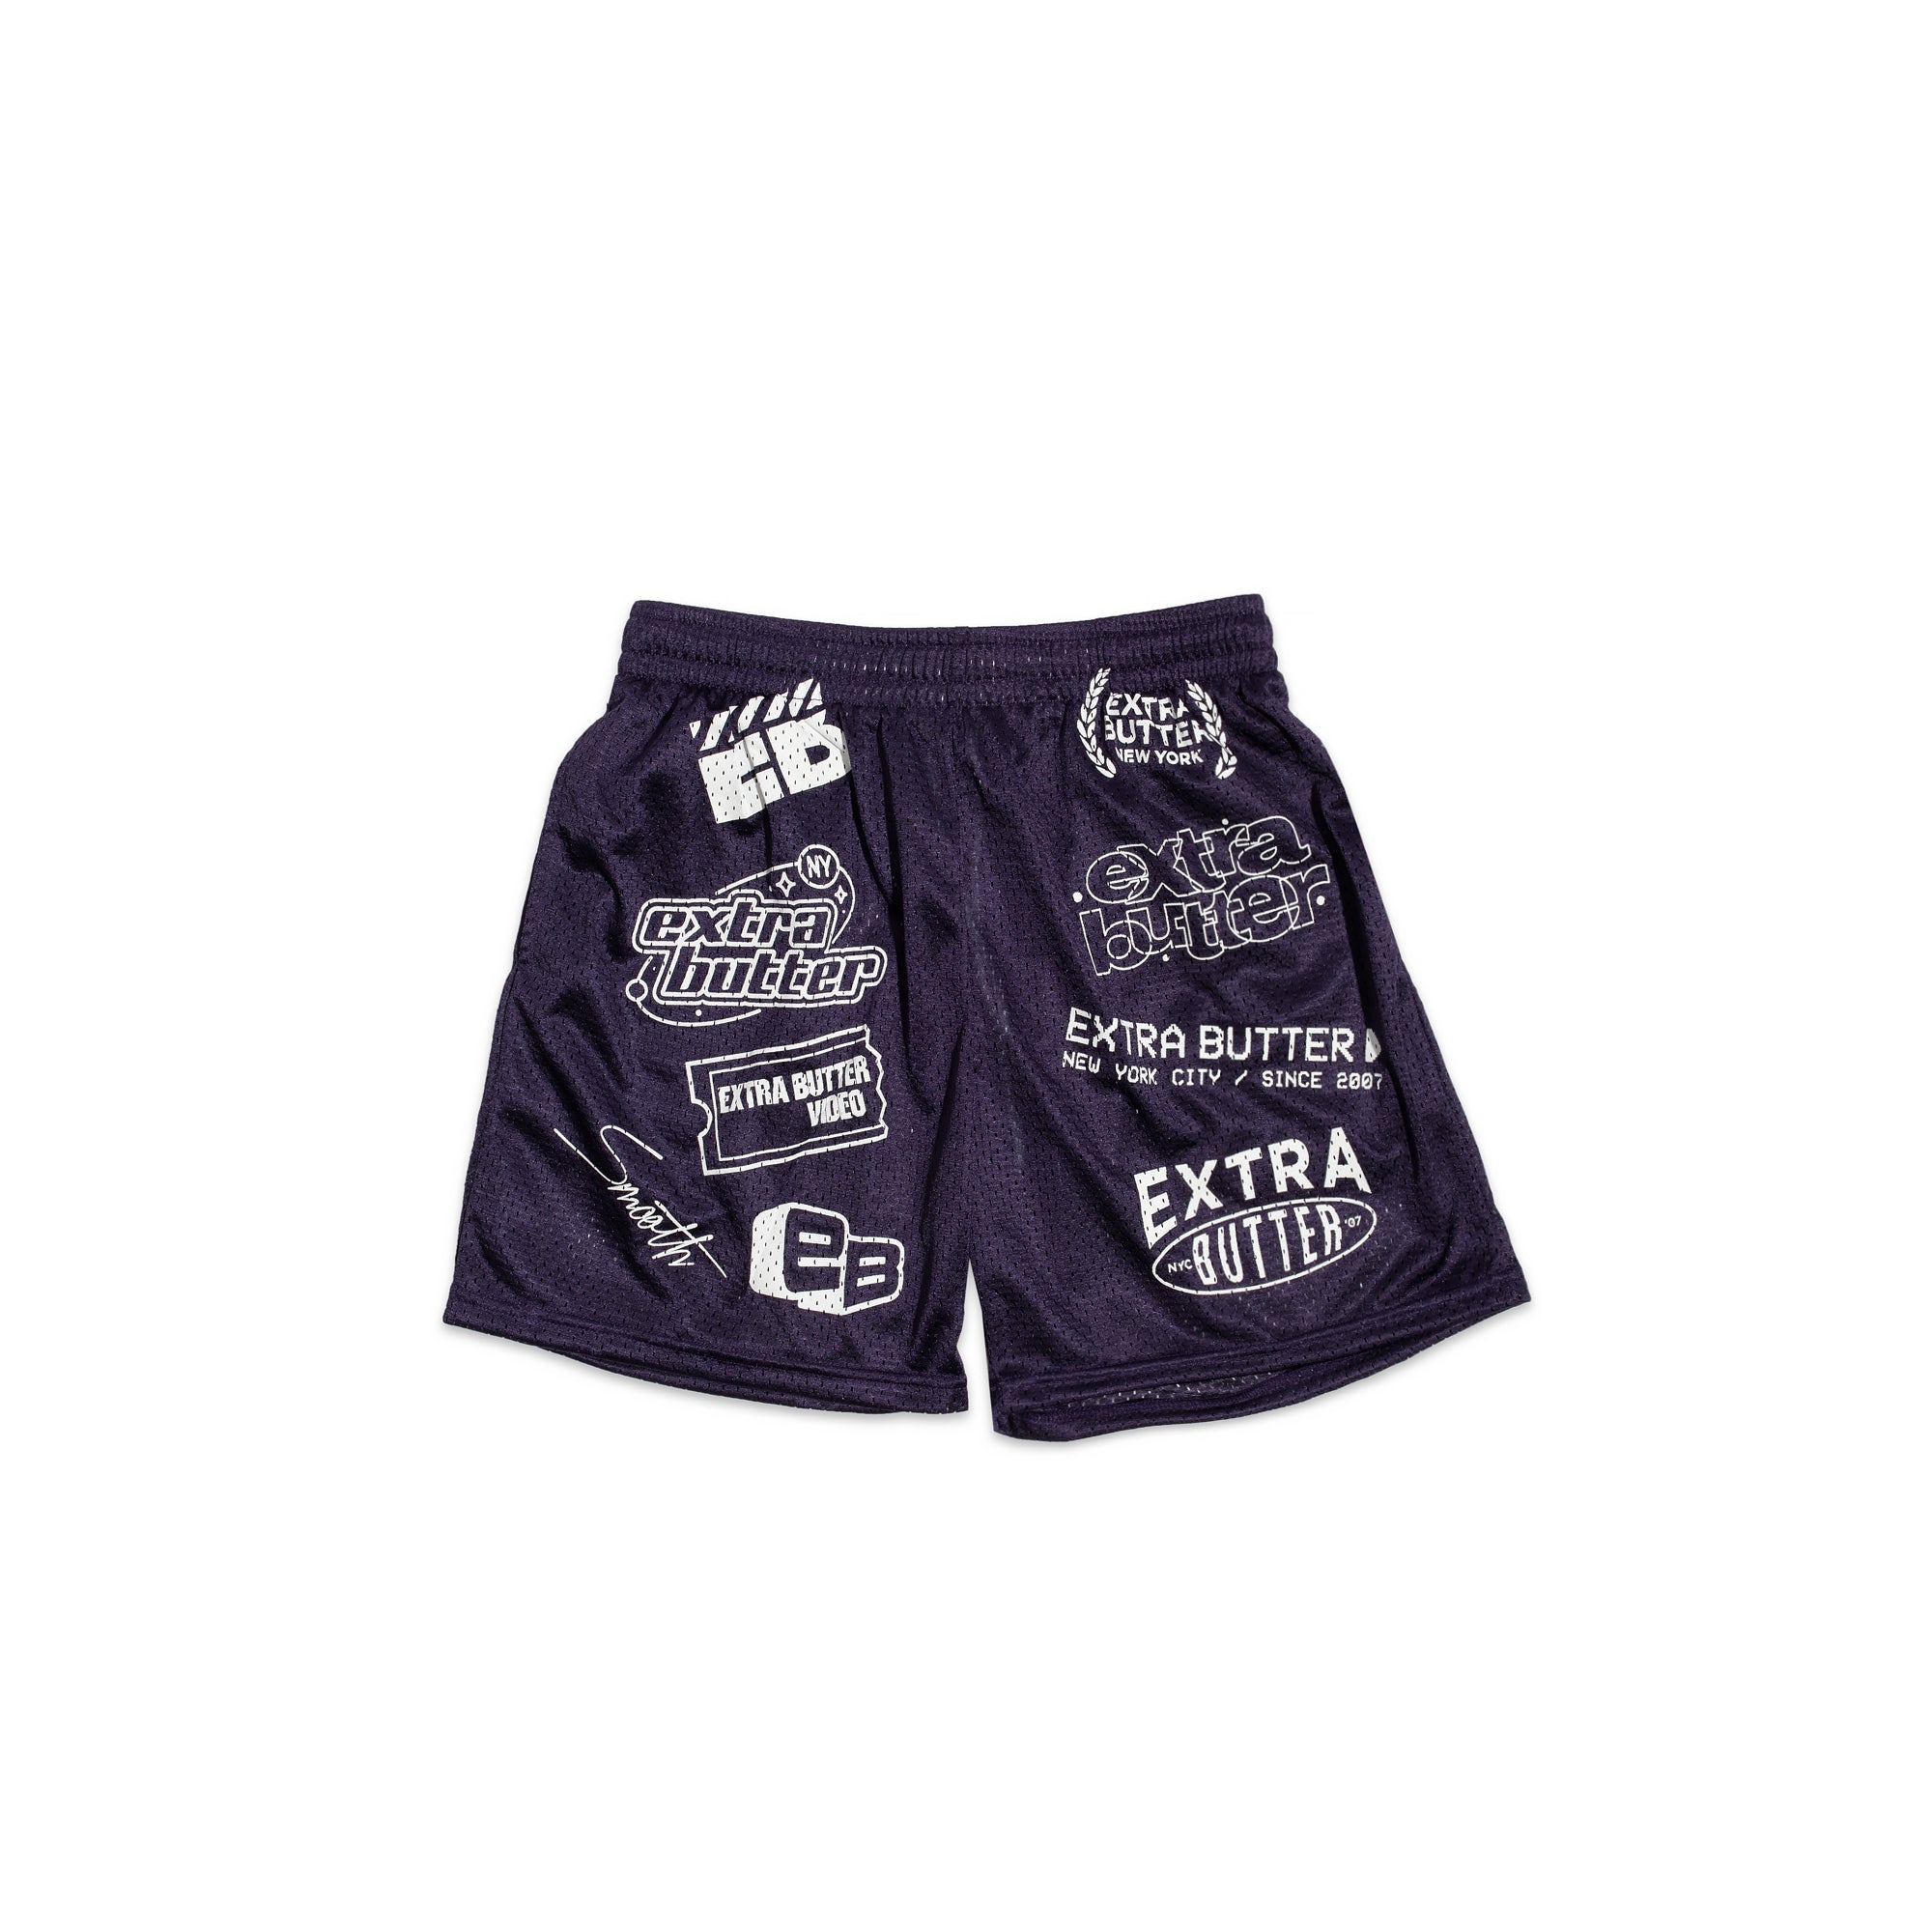 Buy Premium Legacy Mesh Shorts Online